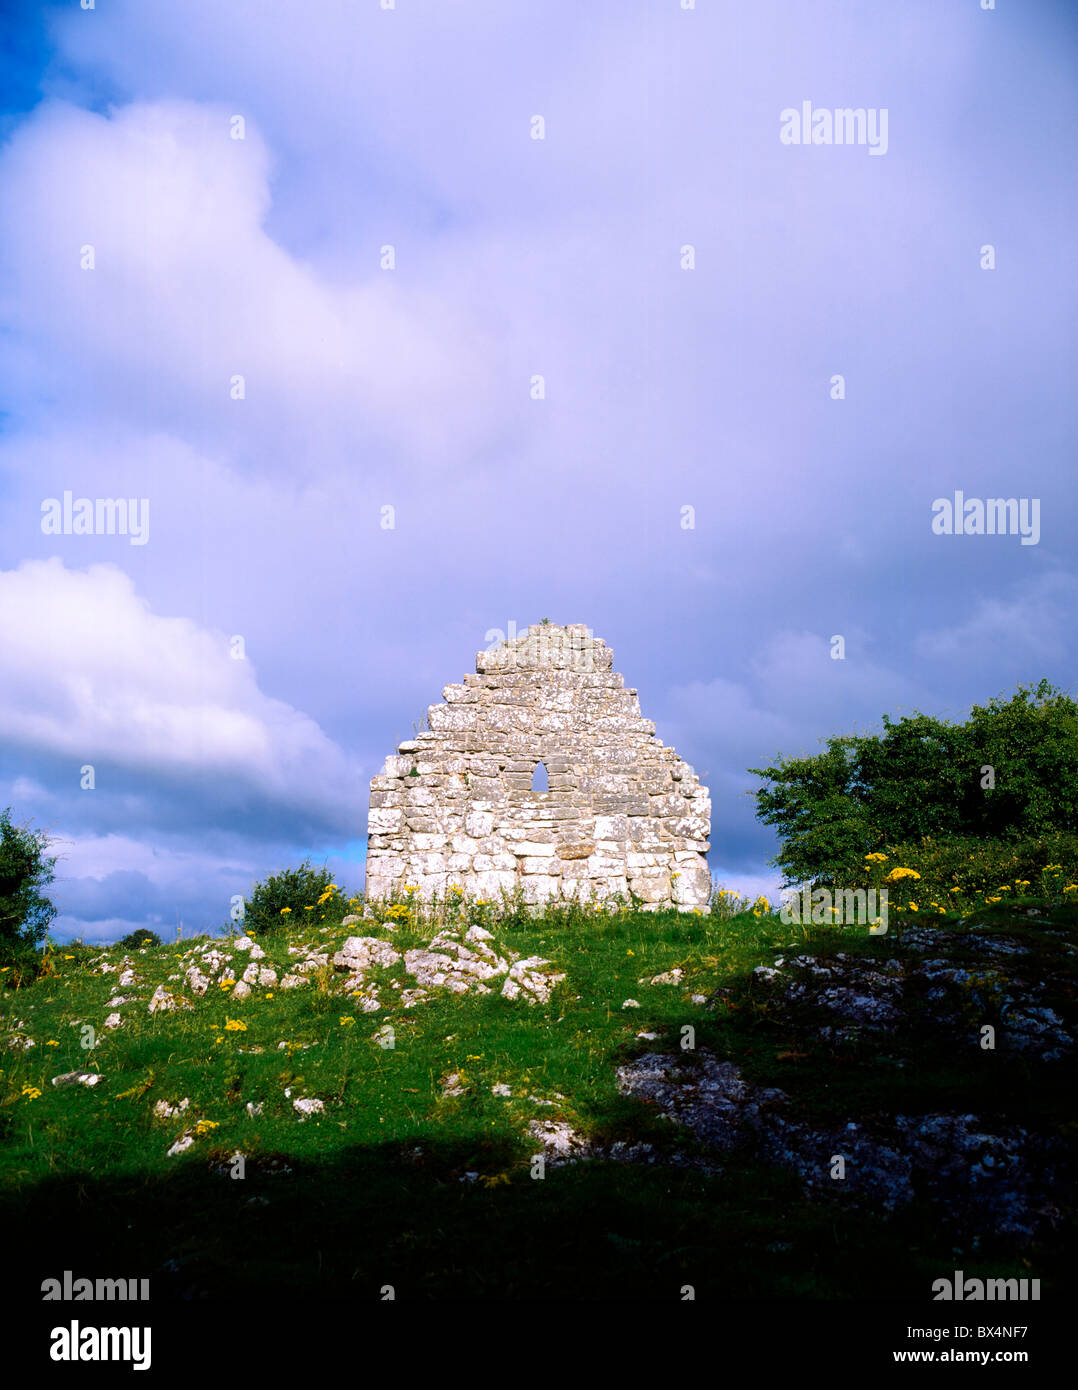 Kildimo, Co Limerick, Irland; Keltische Archäologie In Wiese Stockfoto